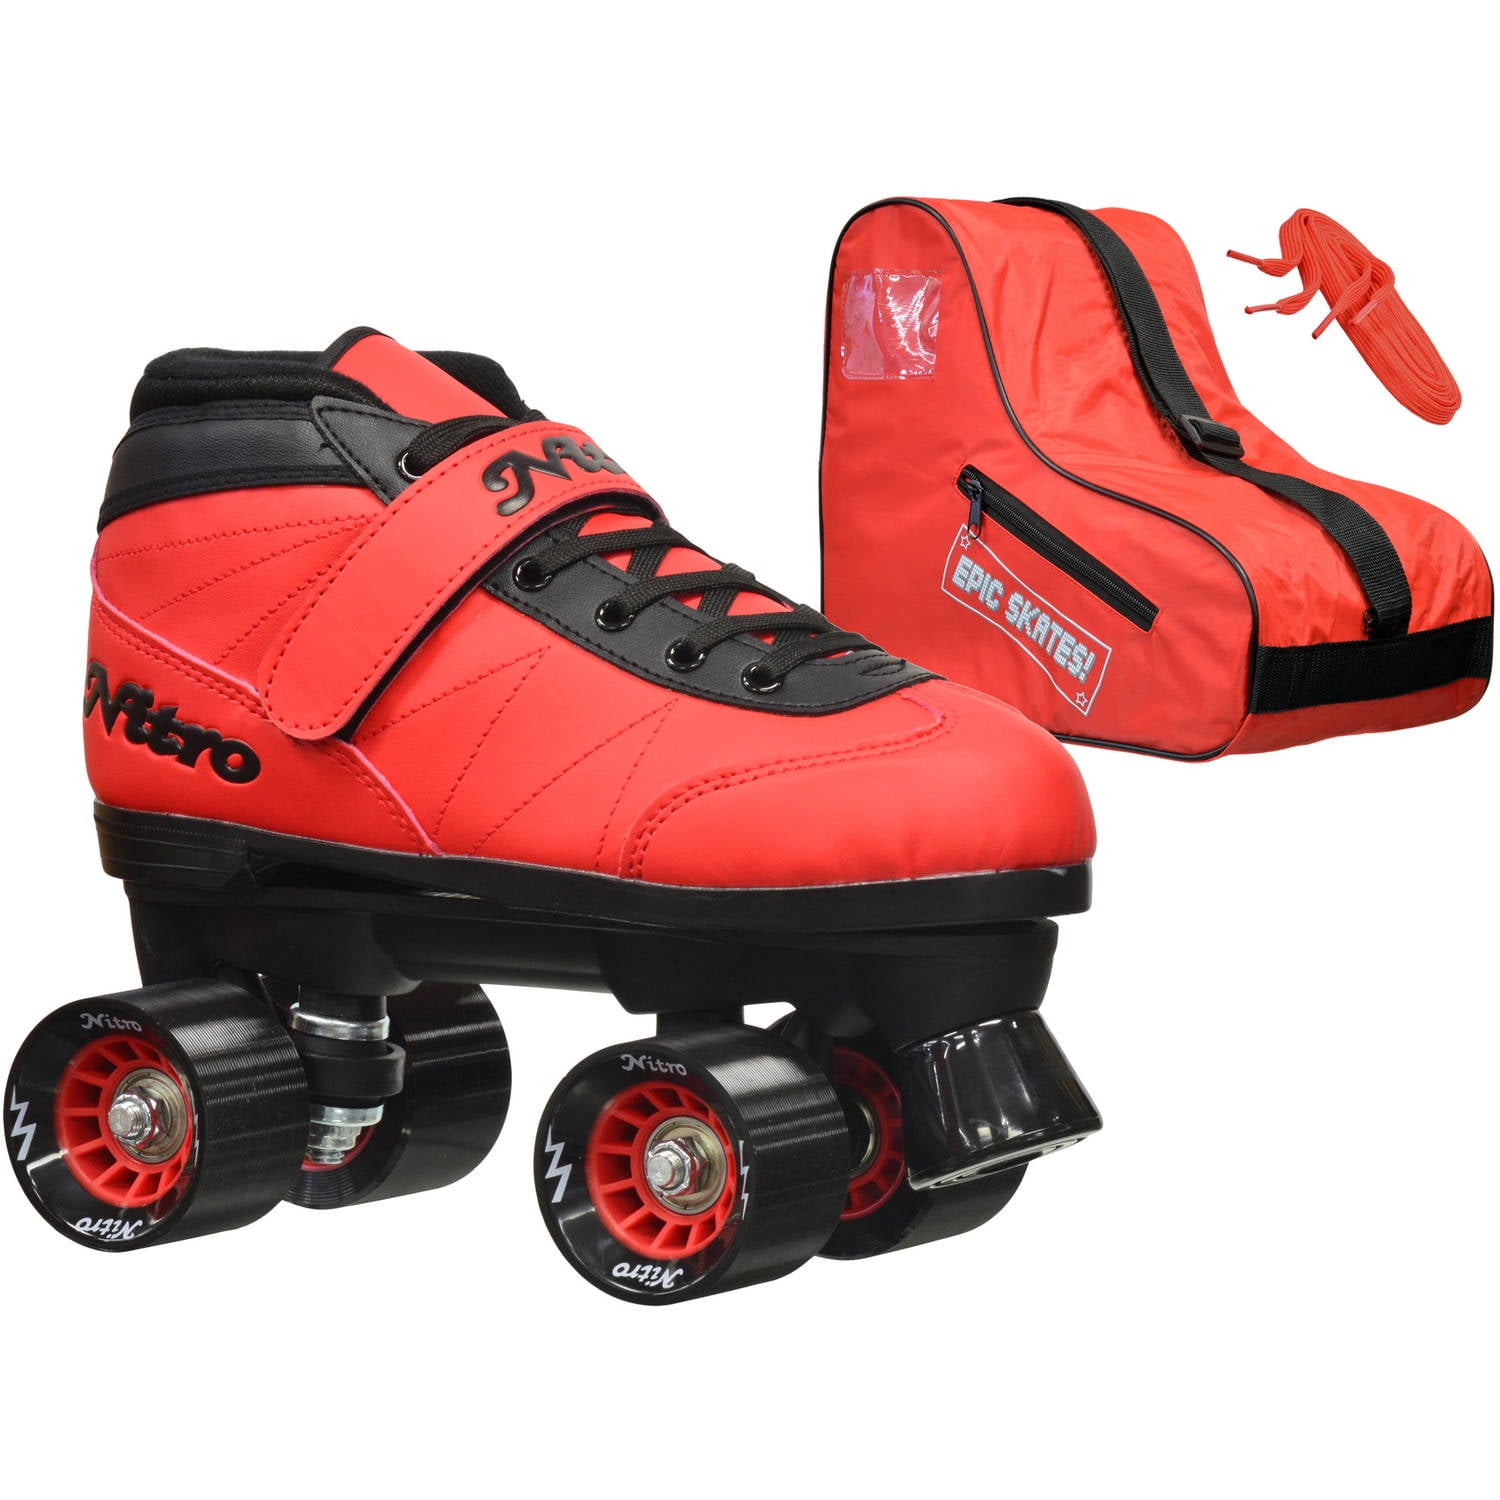 NEW Epic Nitro Indoor Outdoor RED Quad Roller Speed Skate Bundle W/ Bag 